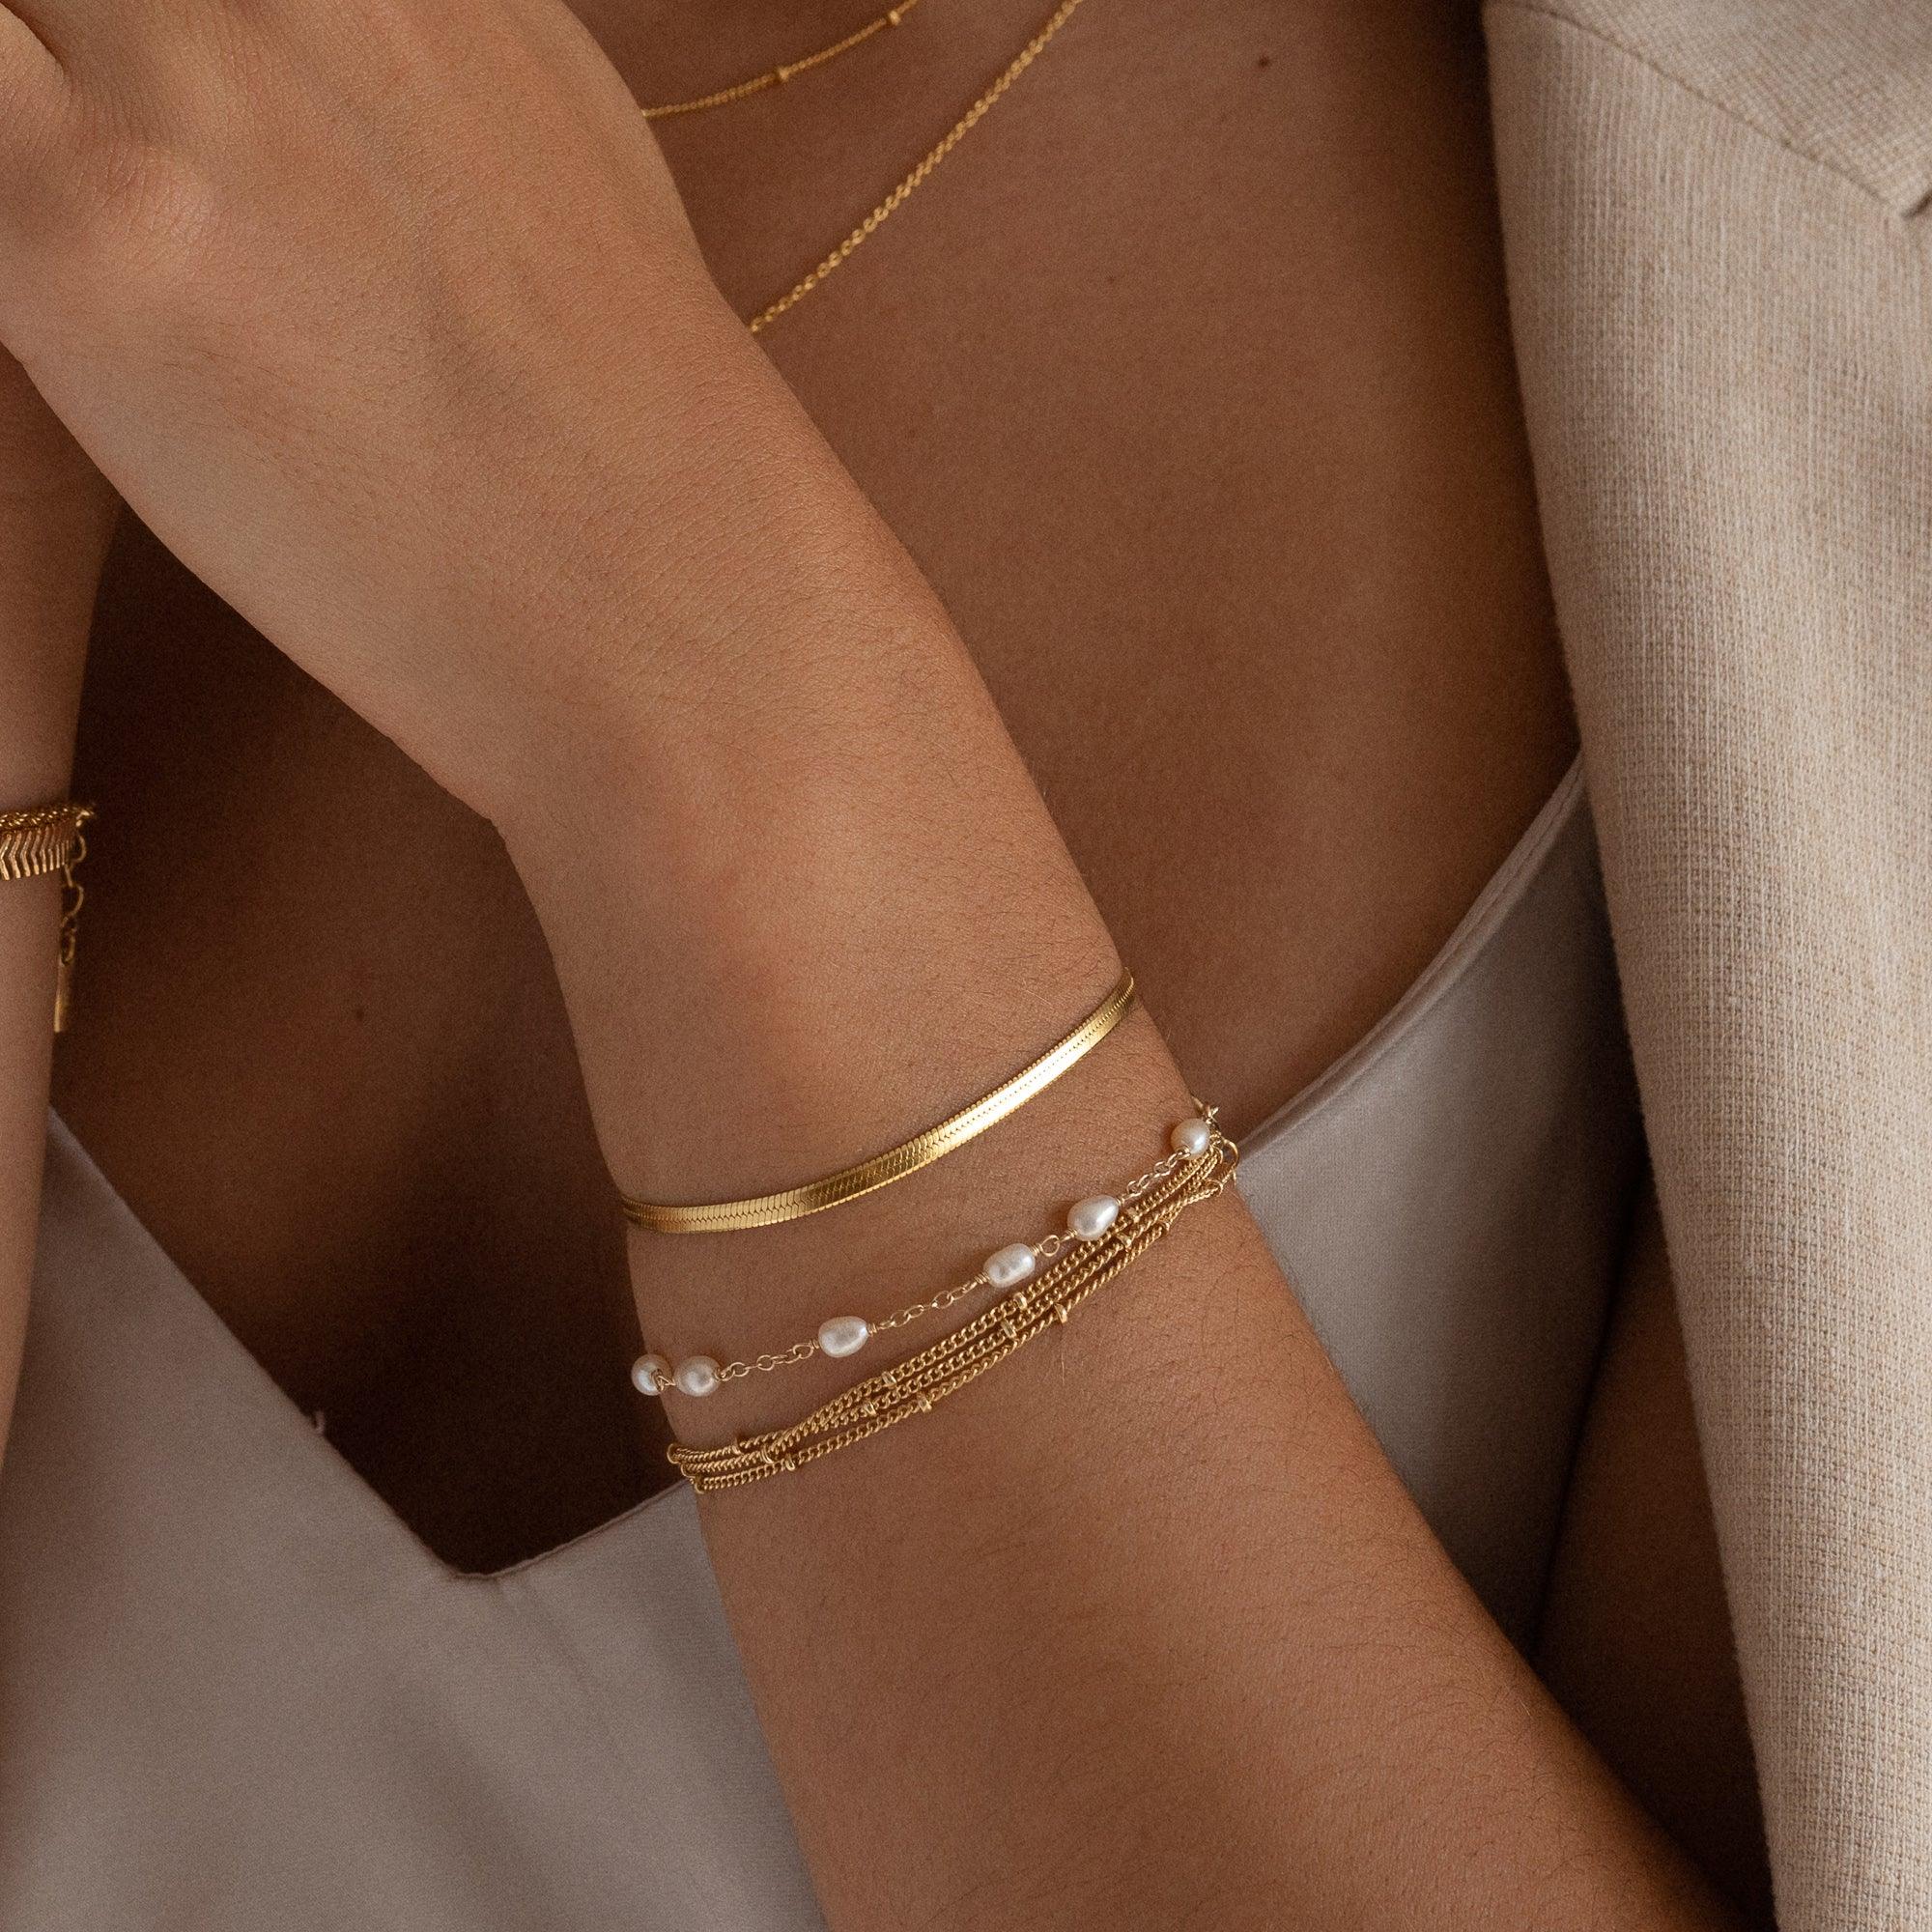 Alexandra Pearl 14k Gold Bracelet - ELLA PALM